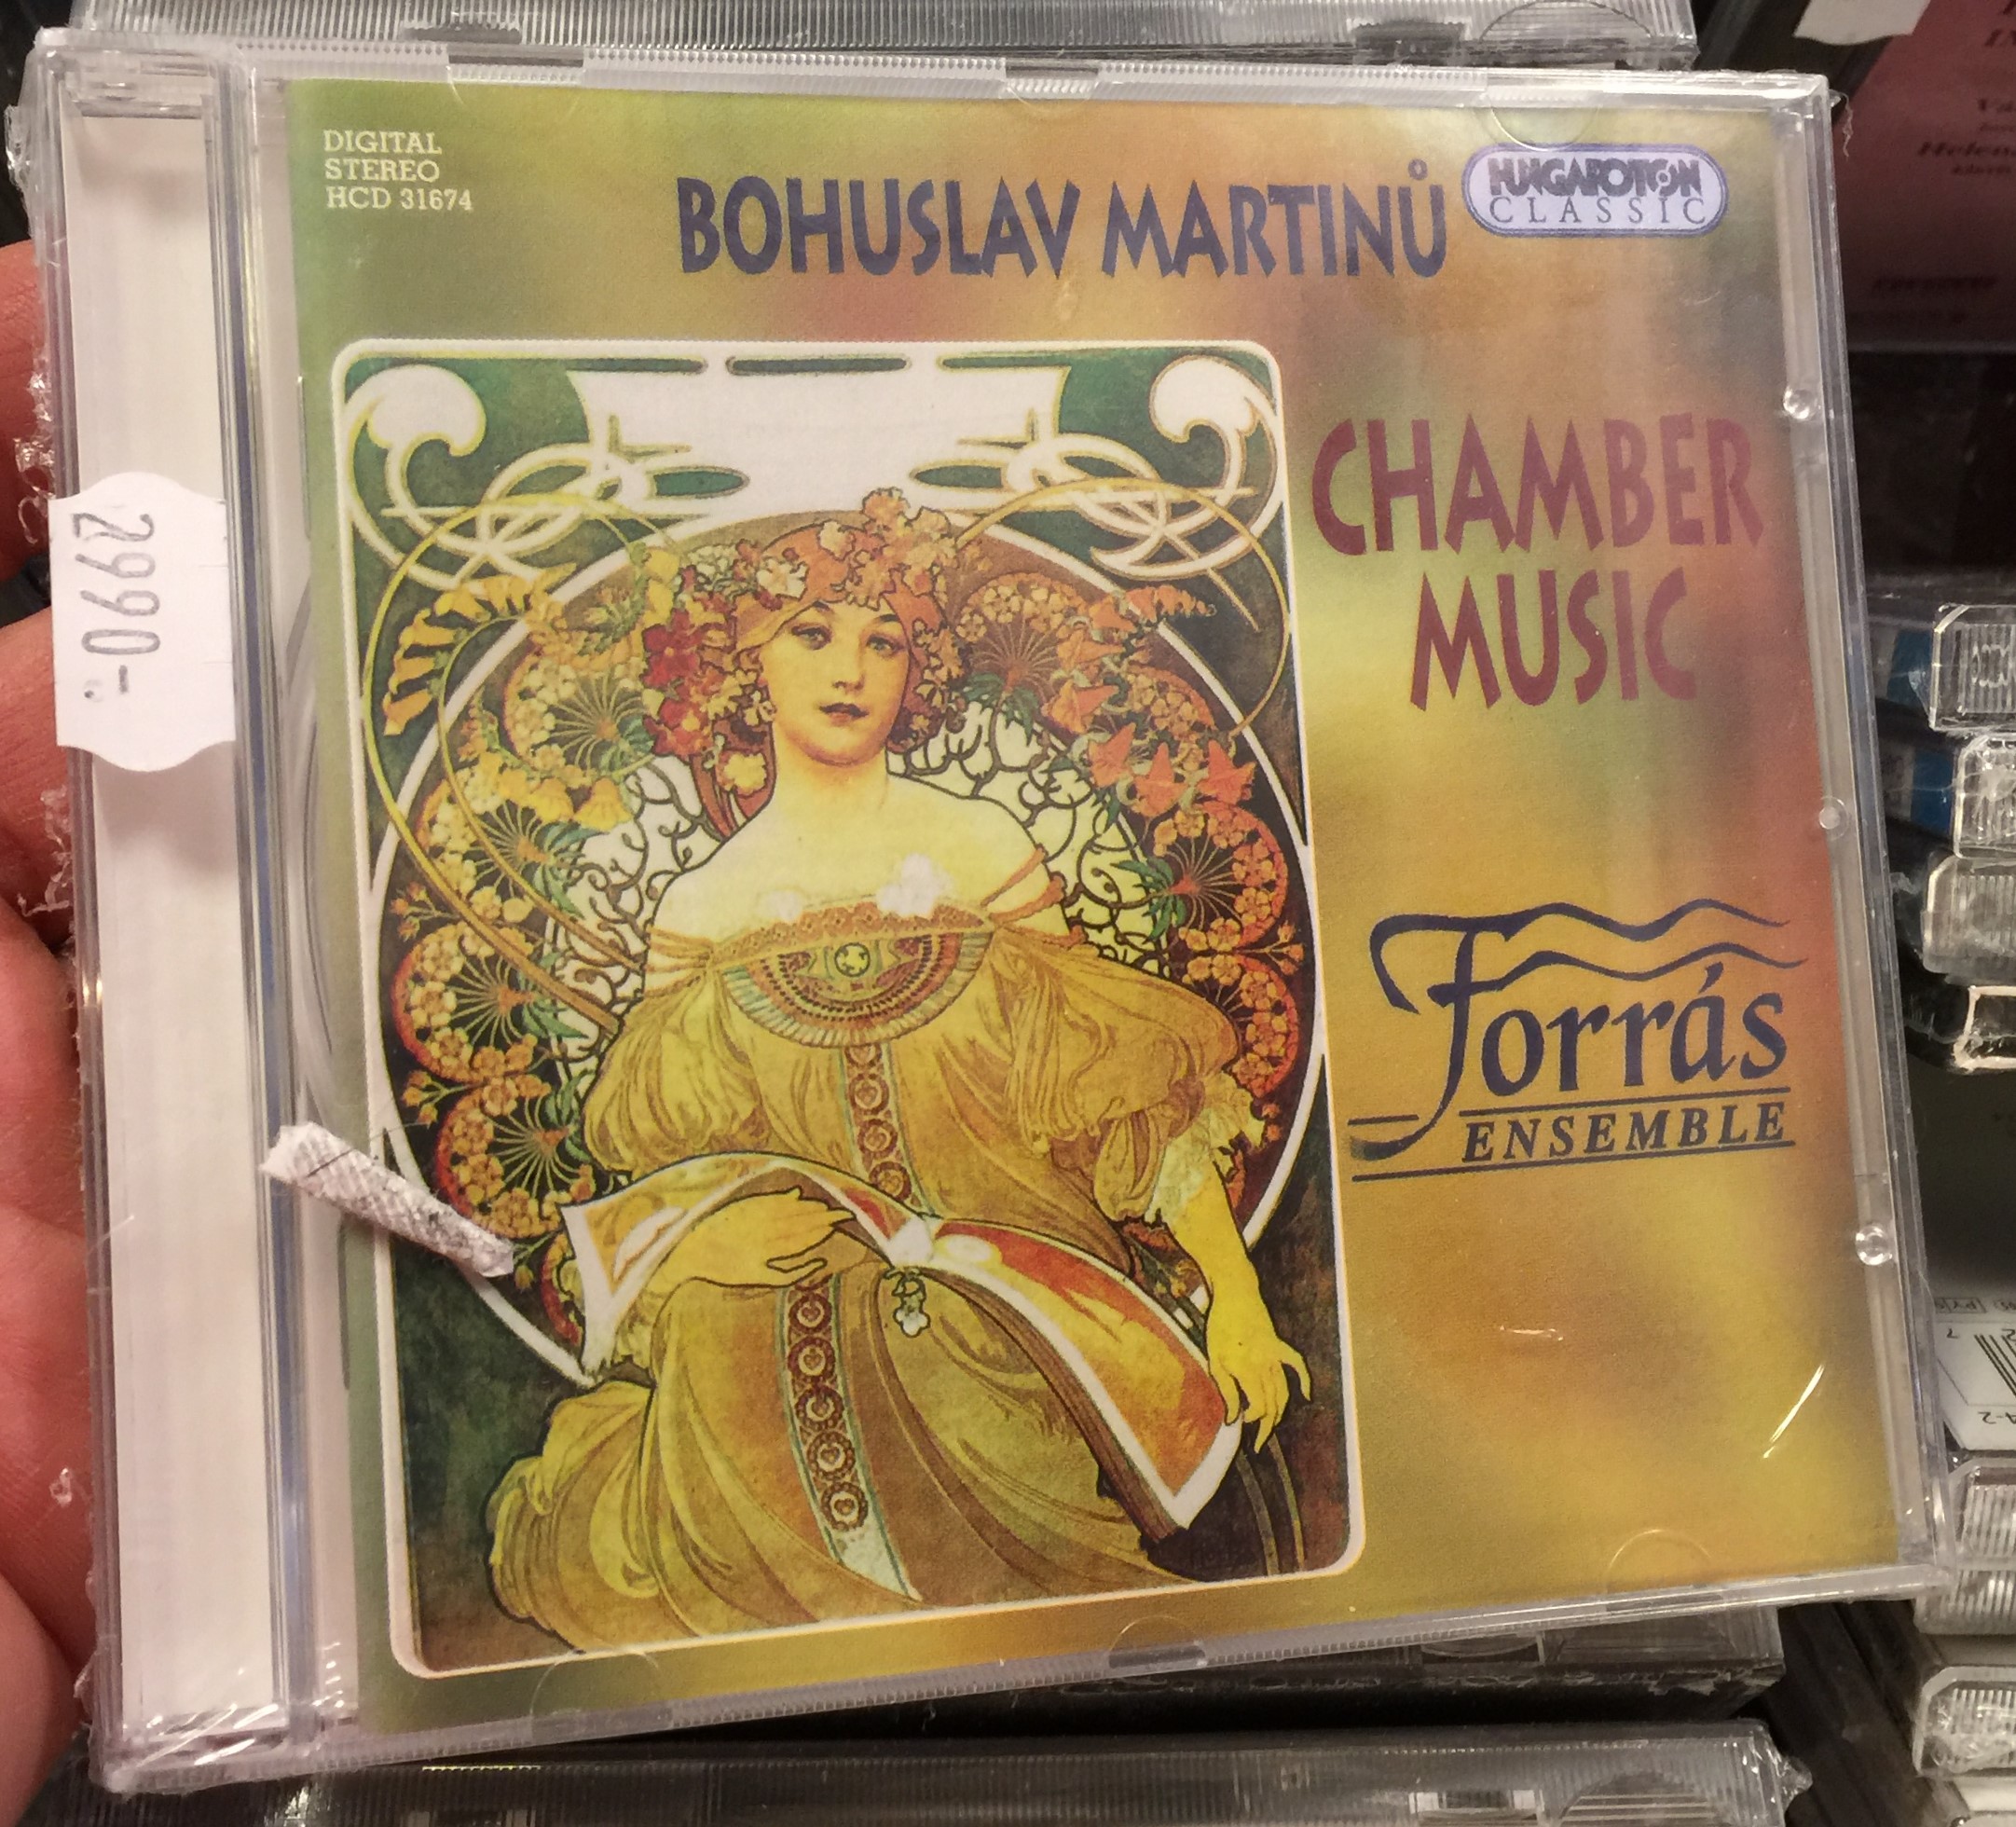 bohuslav-martin-chamber-music-forras-ensemble-hungaroton-classic-audio-cd-1997-stereo-hcd-31674-1-.jpg